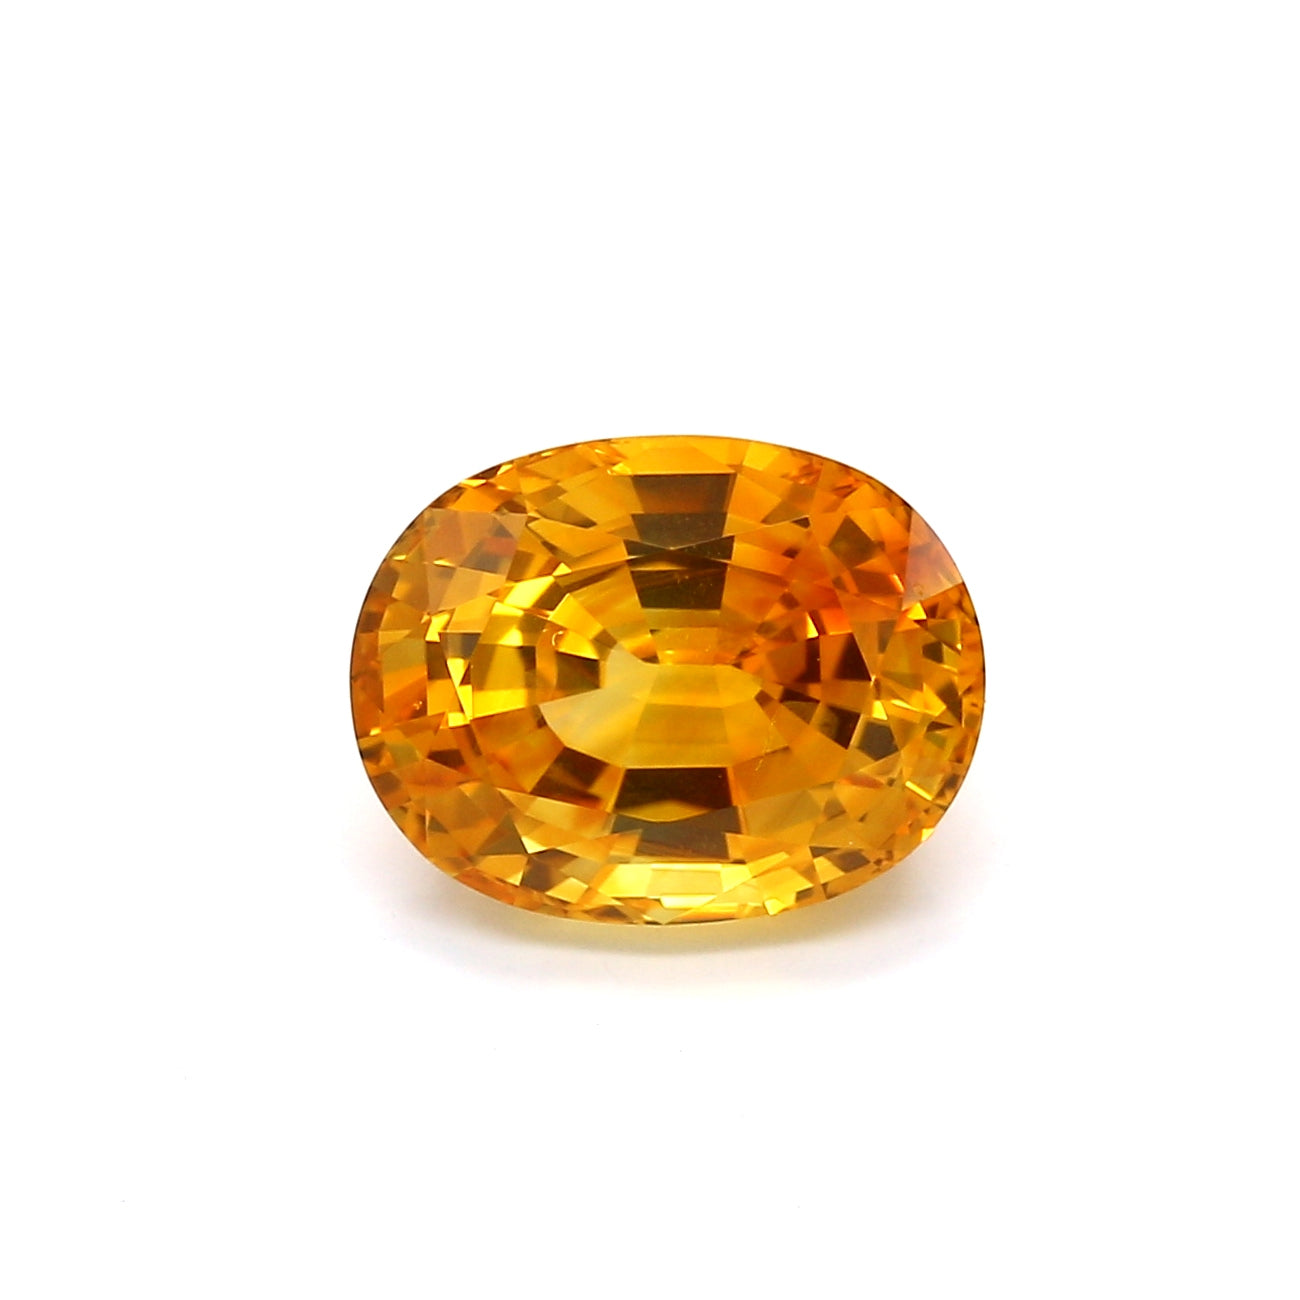 5.11ct Orangy Yellow, Oval Sapphire, Heated, Sri Lanka - 10.96 x 8.50 x 6.29mm